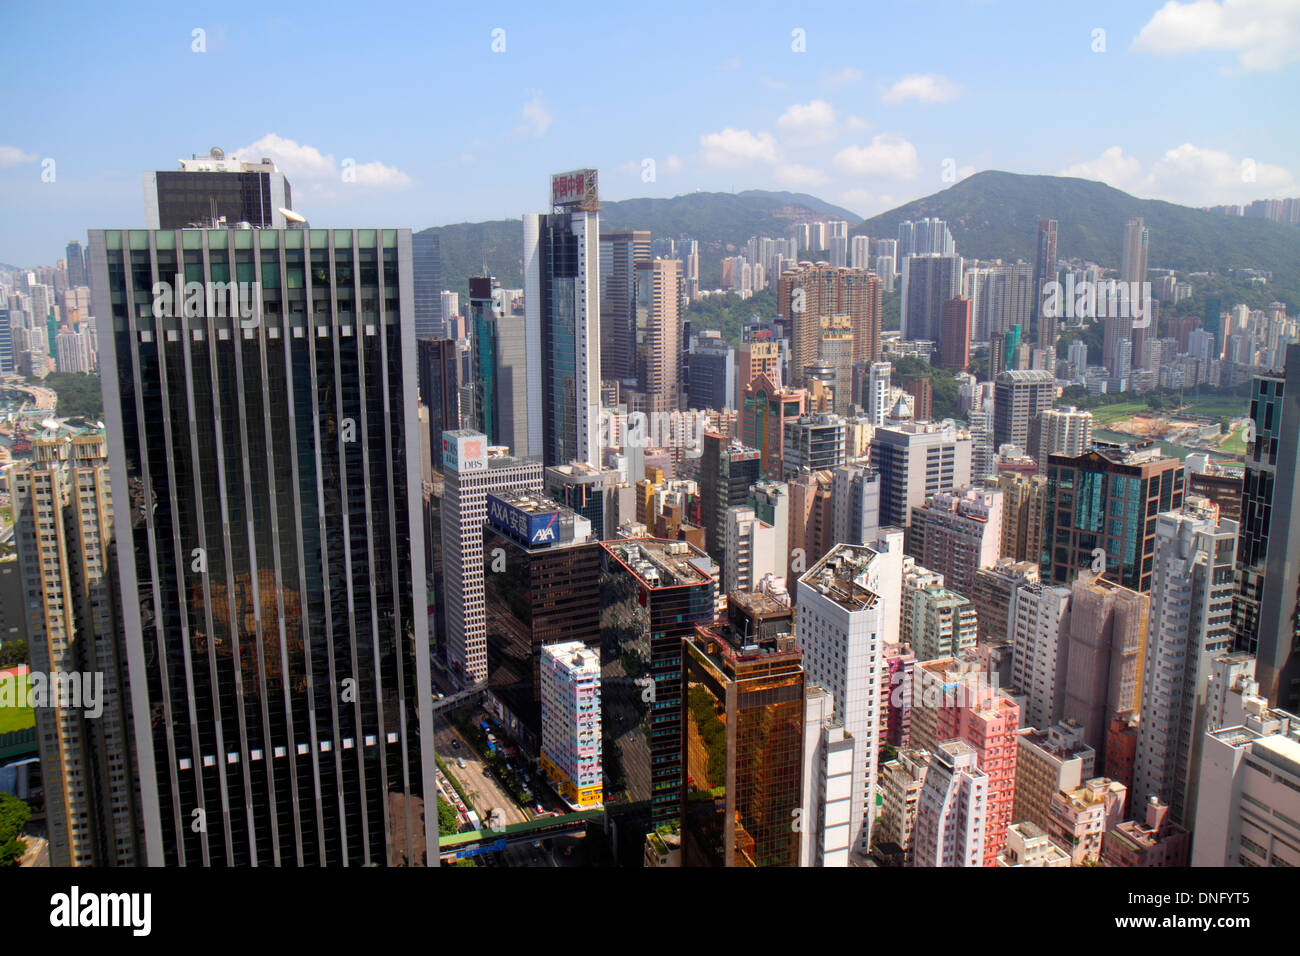 Hong Kong Chine,Hong Kong,Asie,chinois,oriental,île,WAN Chai,Causeway Bay,gratte-ciel de haute élévation gratte-ciel bâtiments gratte-ciel, bâtiments, ville sk Banque D'Images